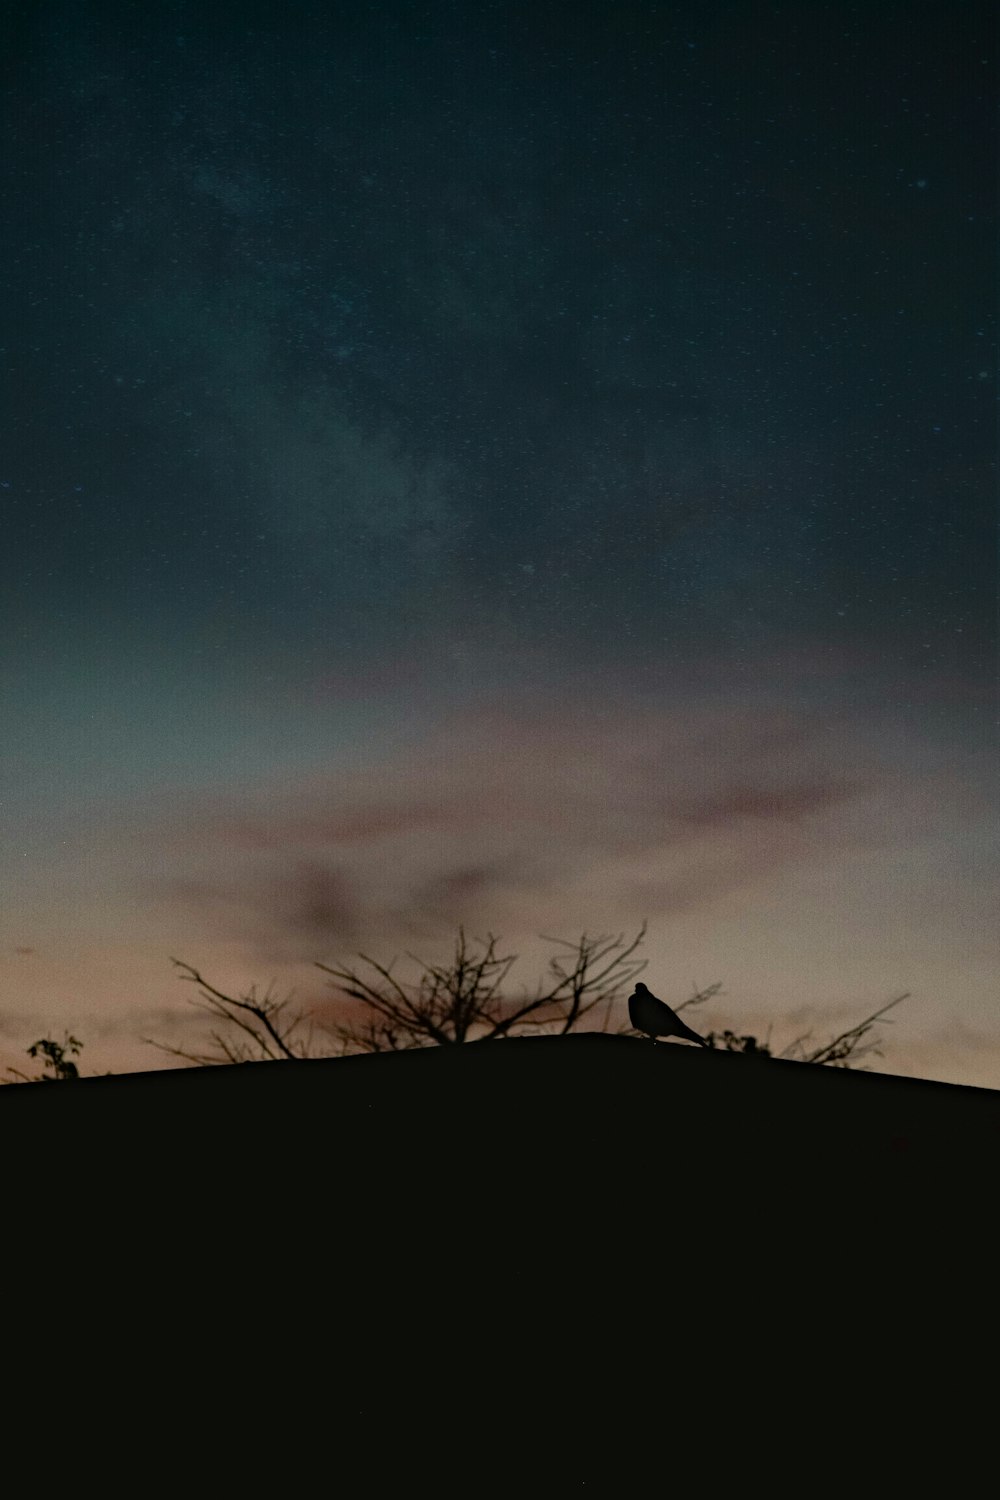 silhouette of bird during nighttime